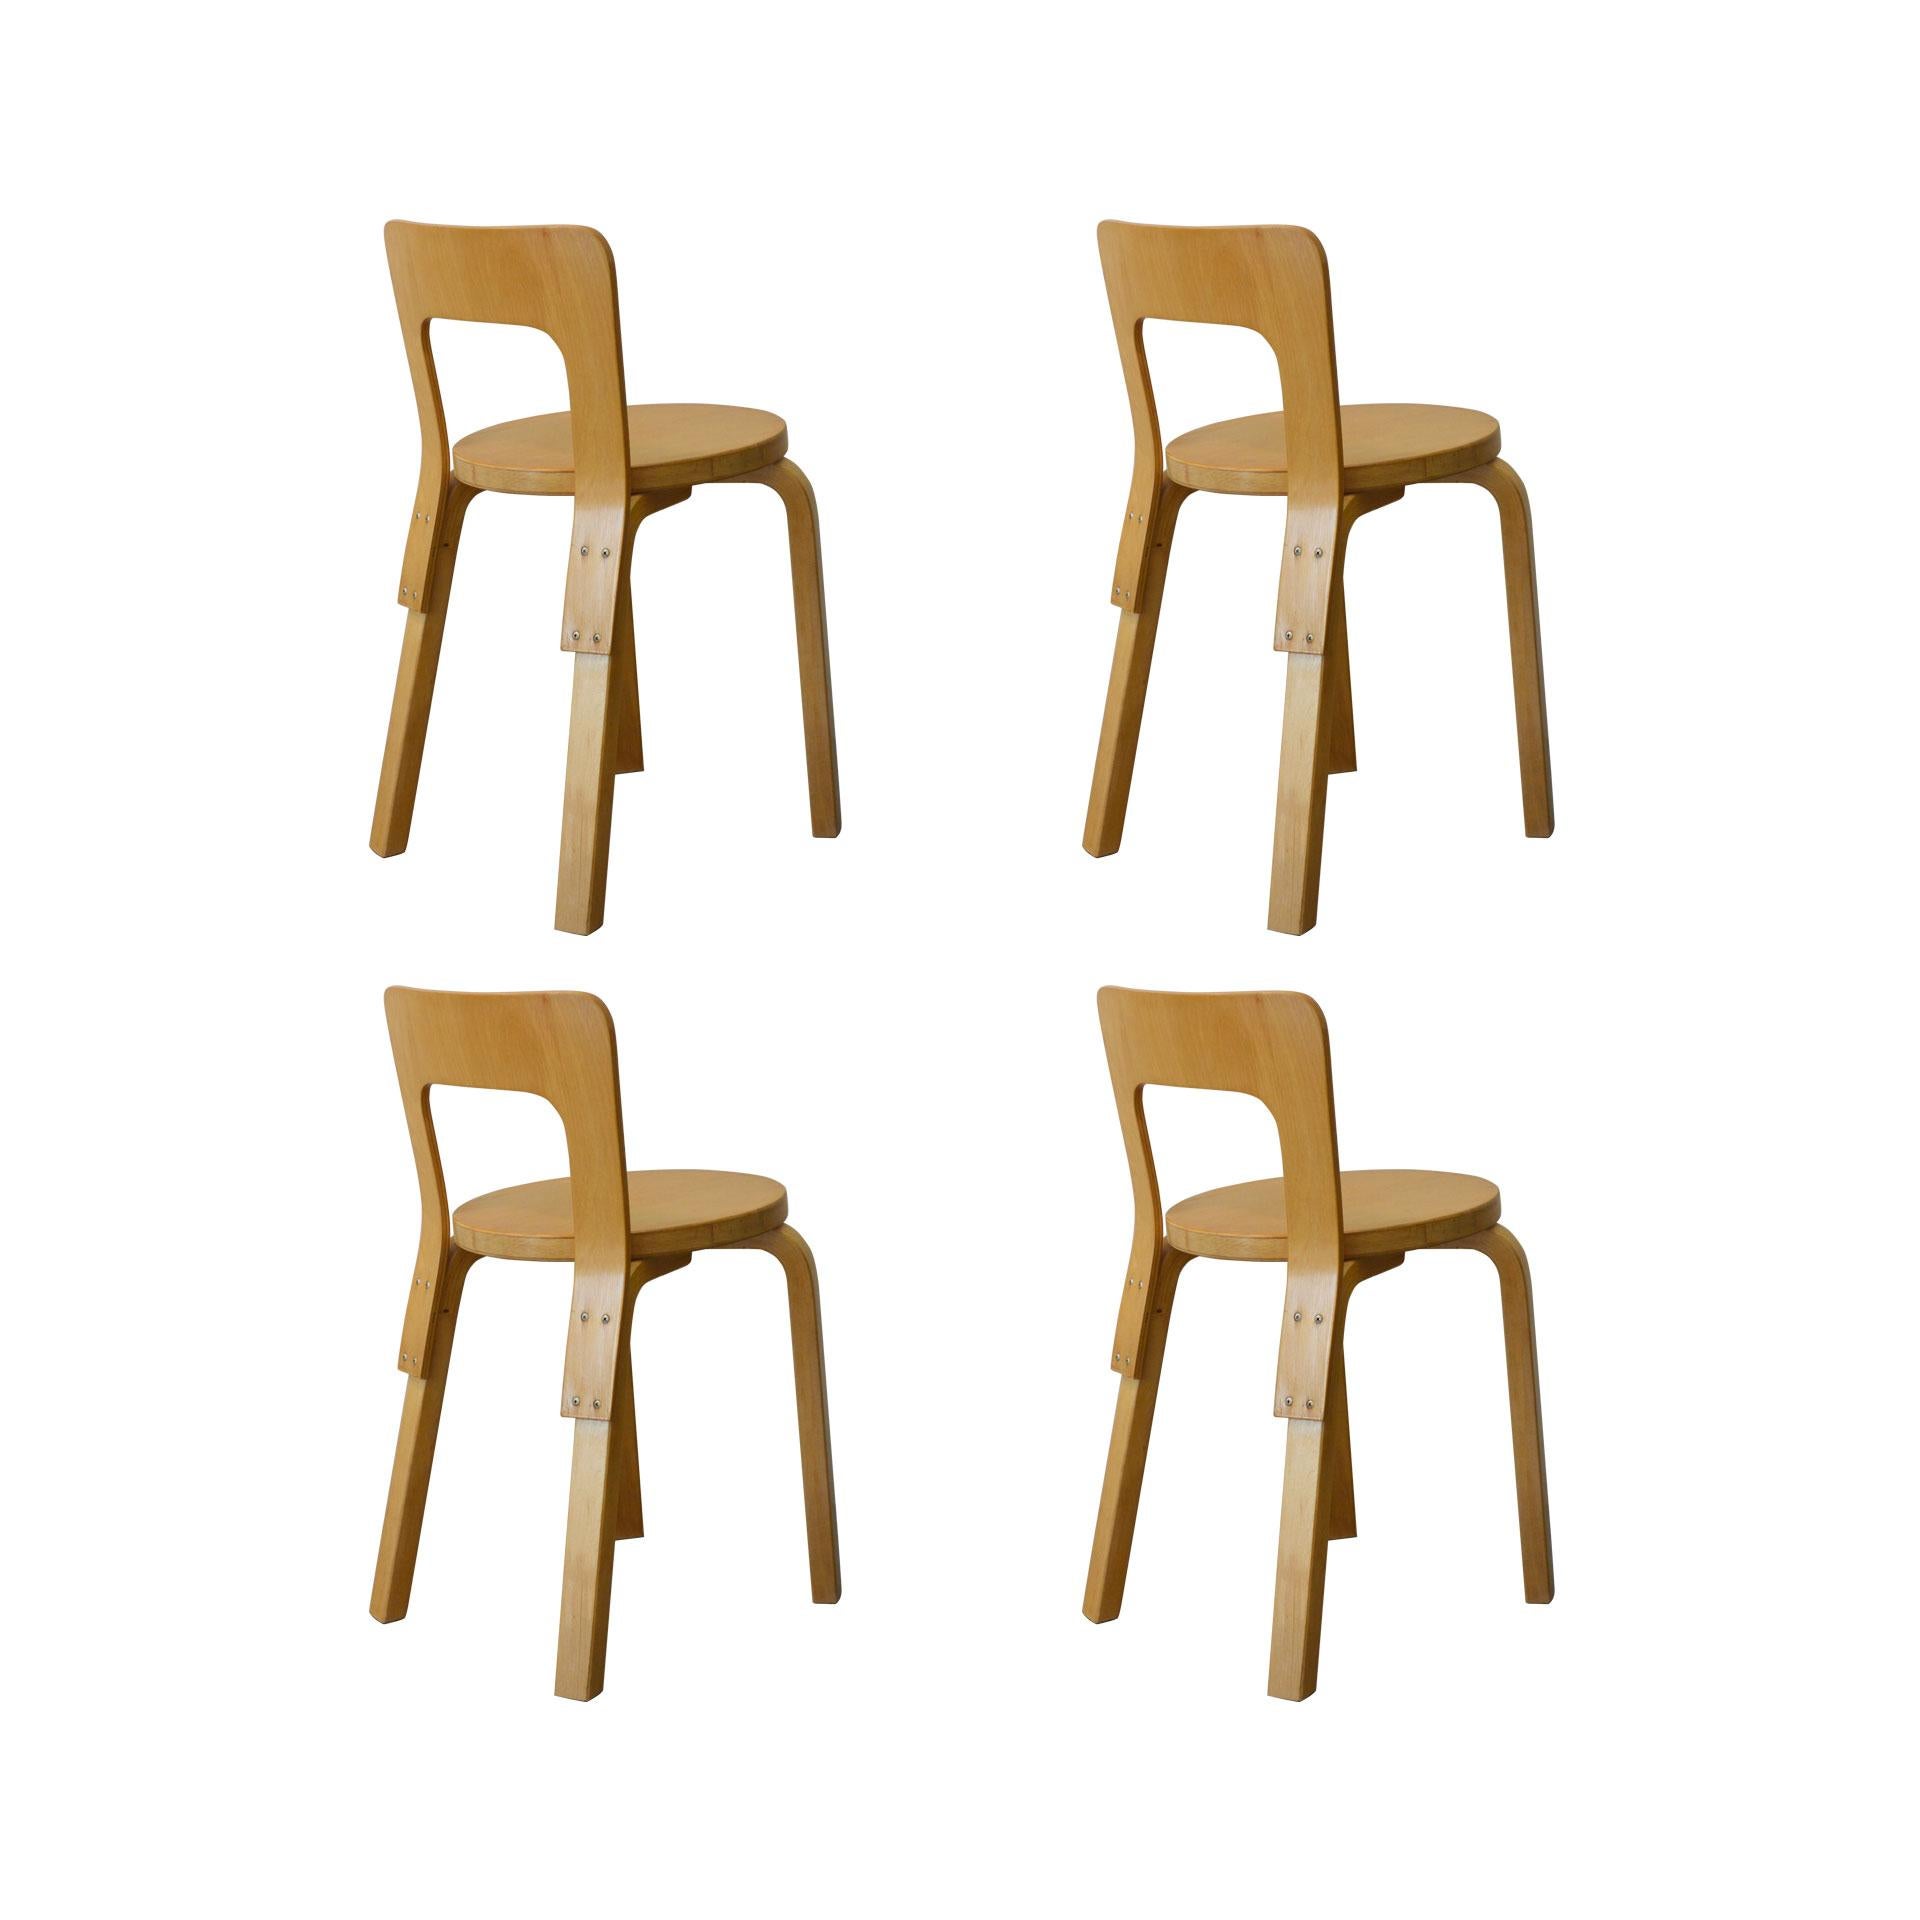 birch wood chairs